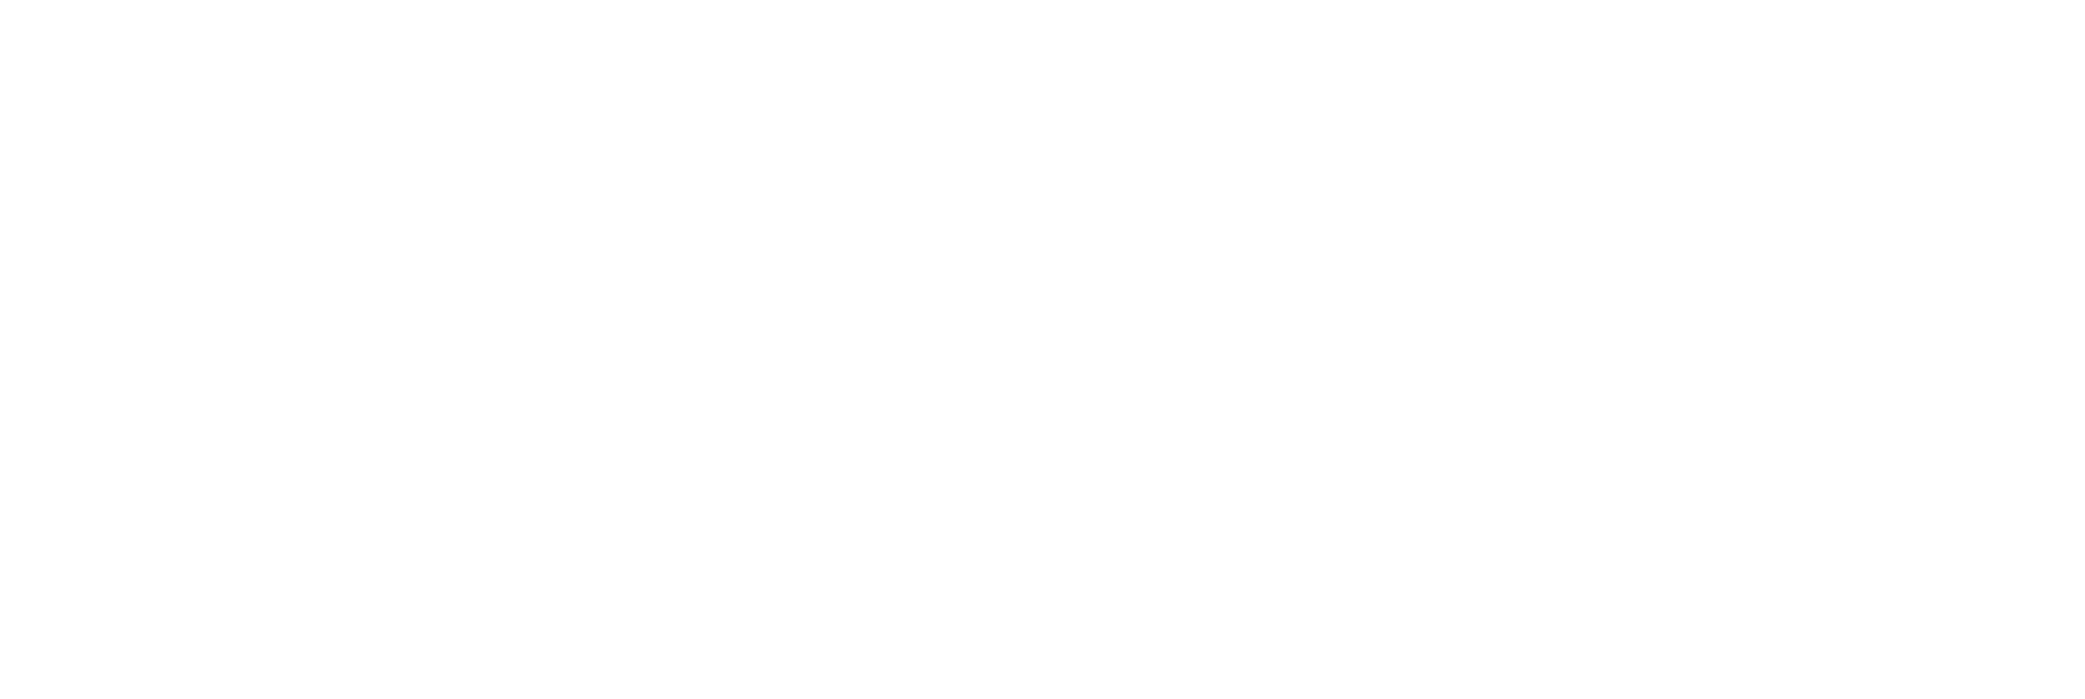 Hydrogen Stock